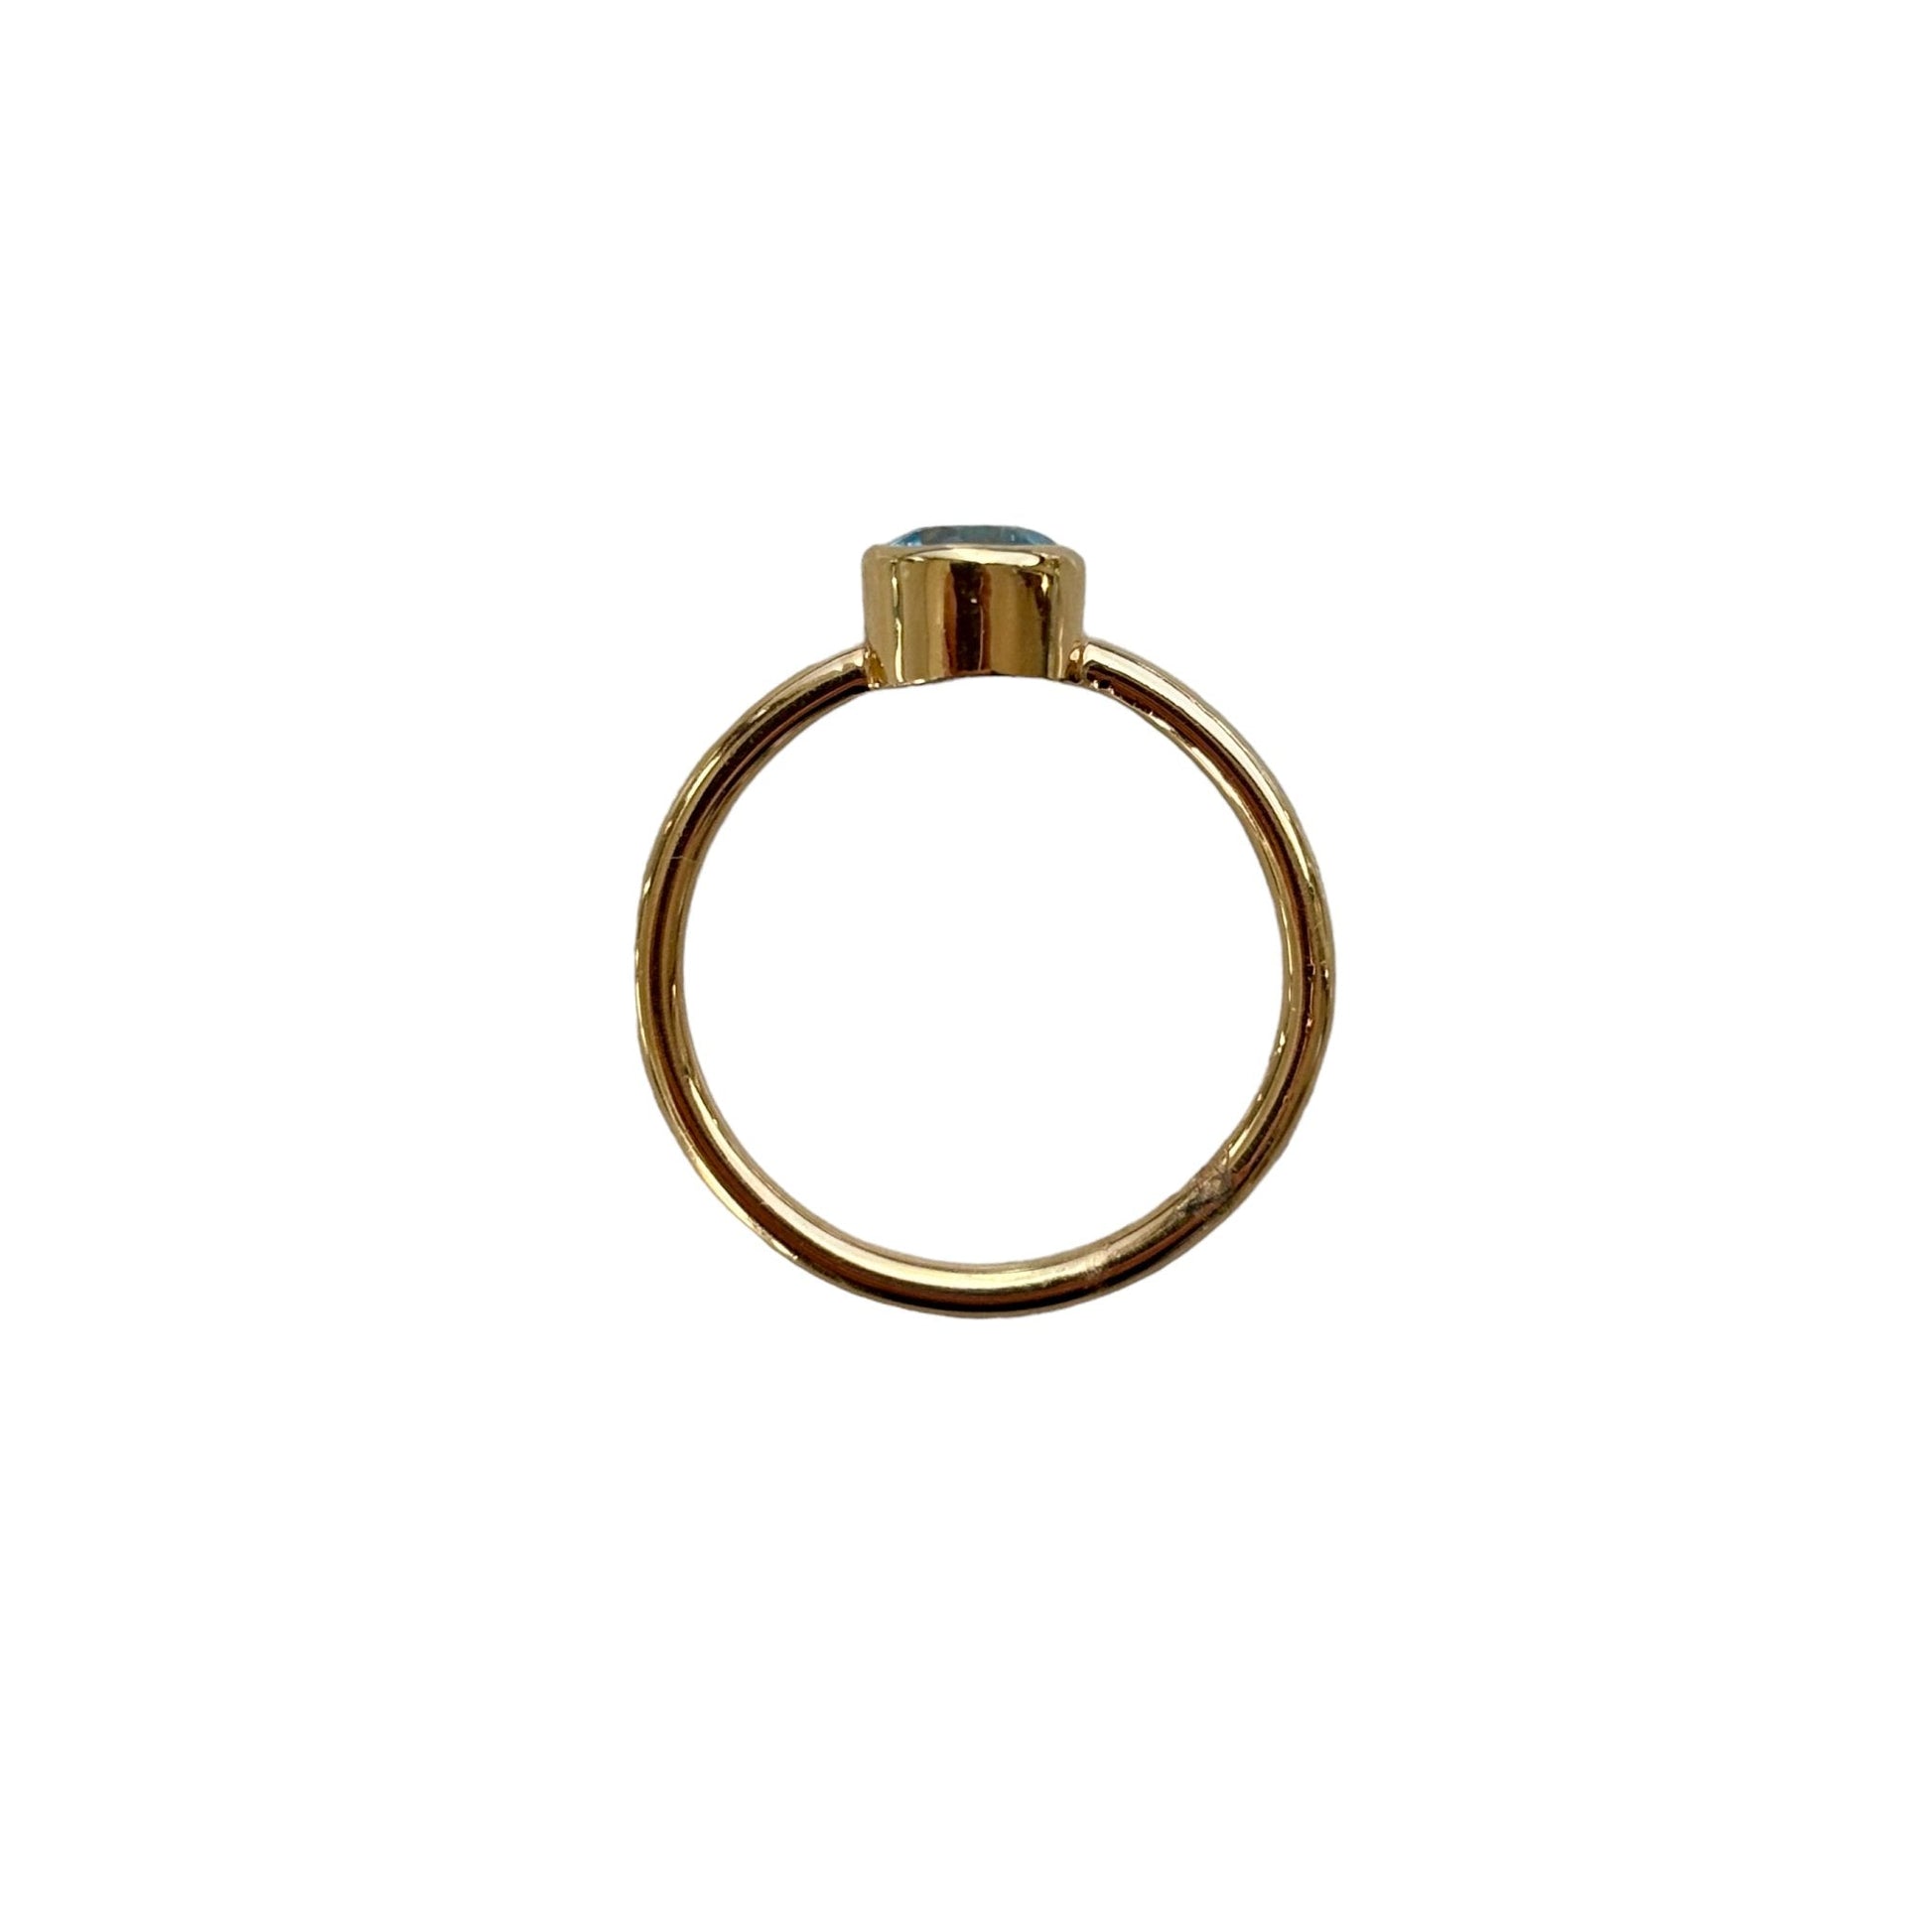 Bezel-Set Round Blue Topaz Solitaire Engagement Ring - R. Mouzannar Jewelry